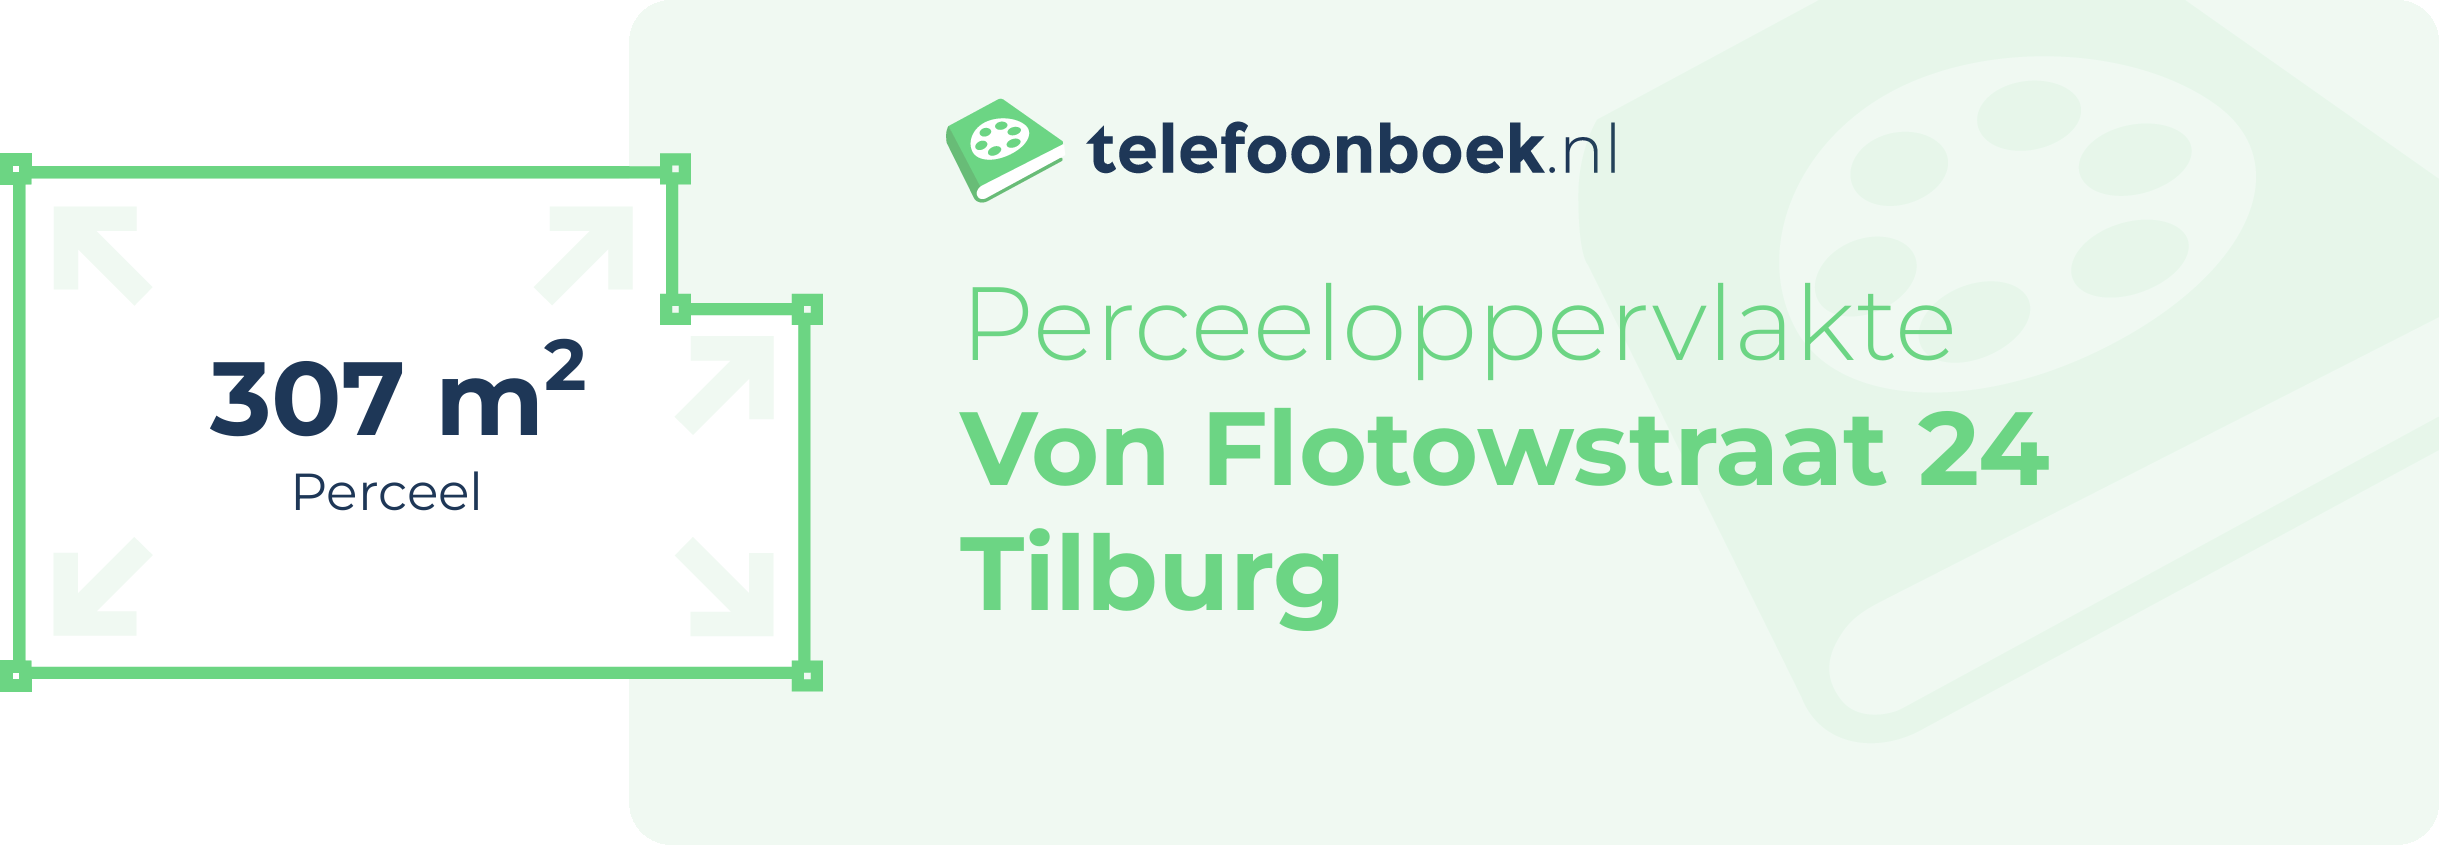 Perceeloppervlakte Von Flotowstraat 24 Tilburg